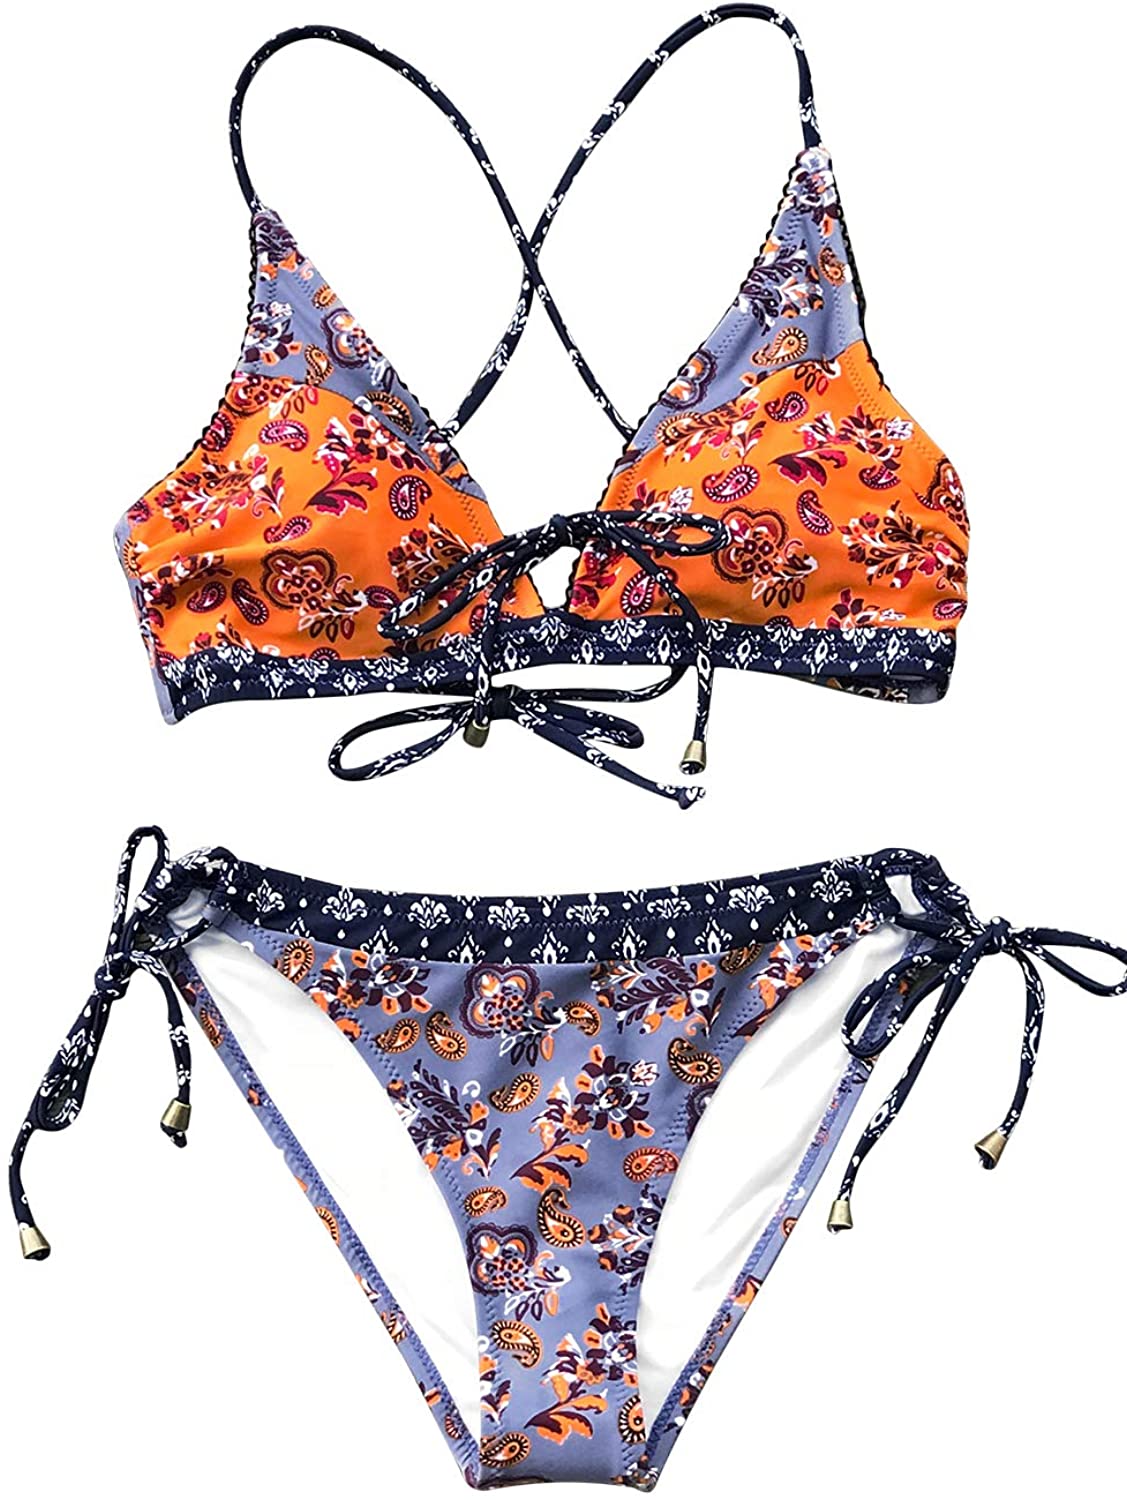 CUPSHE Women’s Paisley Print Bikini Set Back, Multicolored, Size X